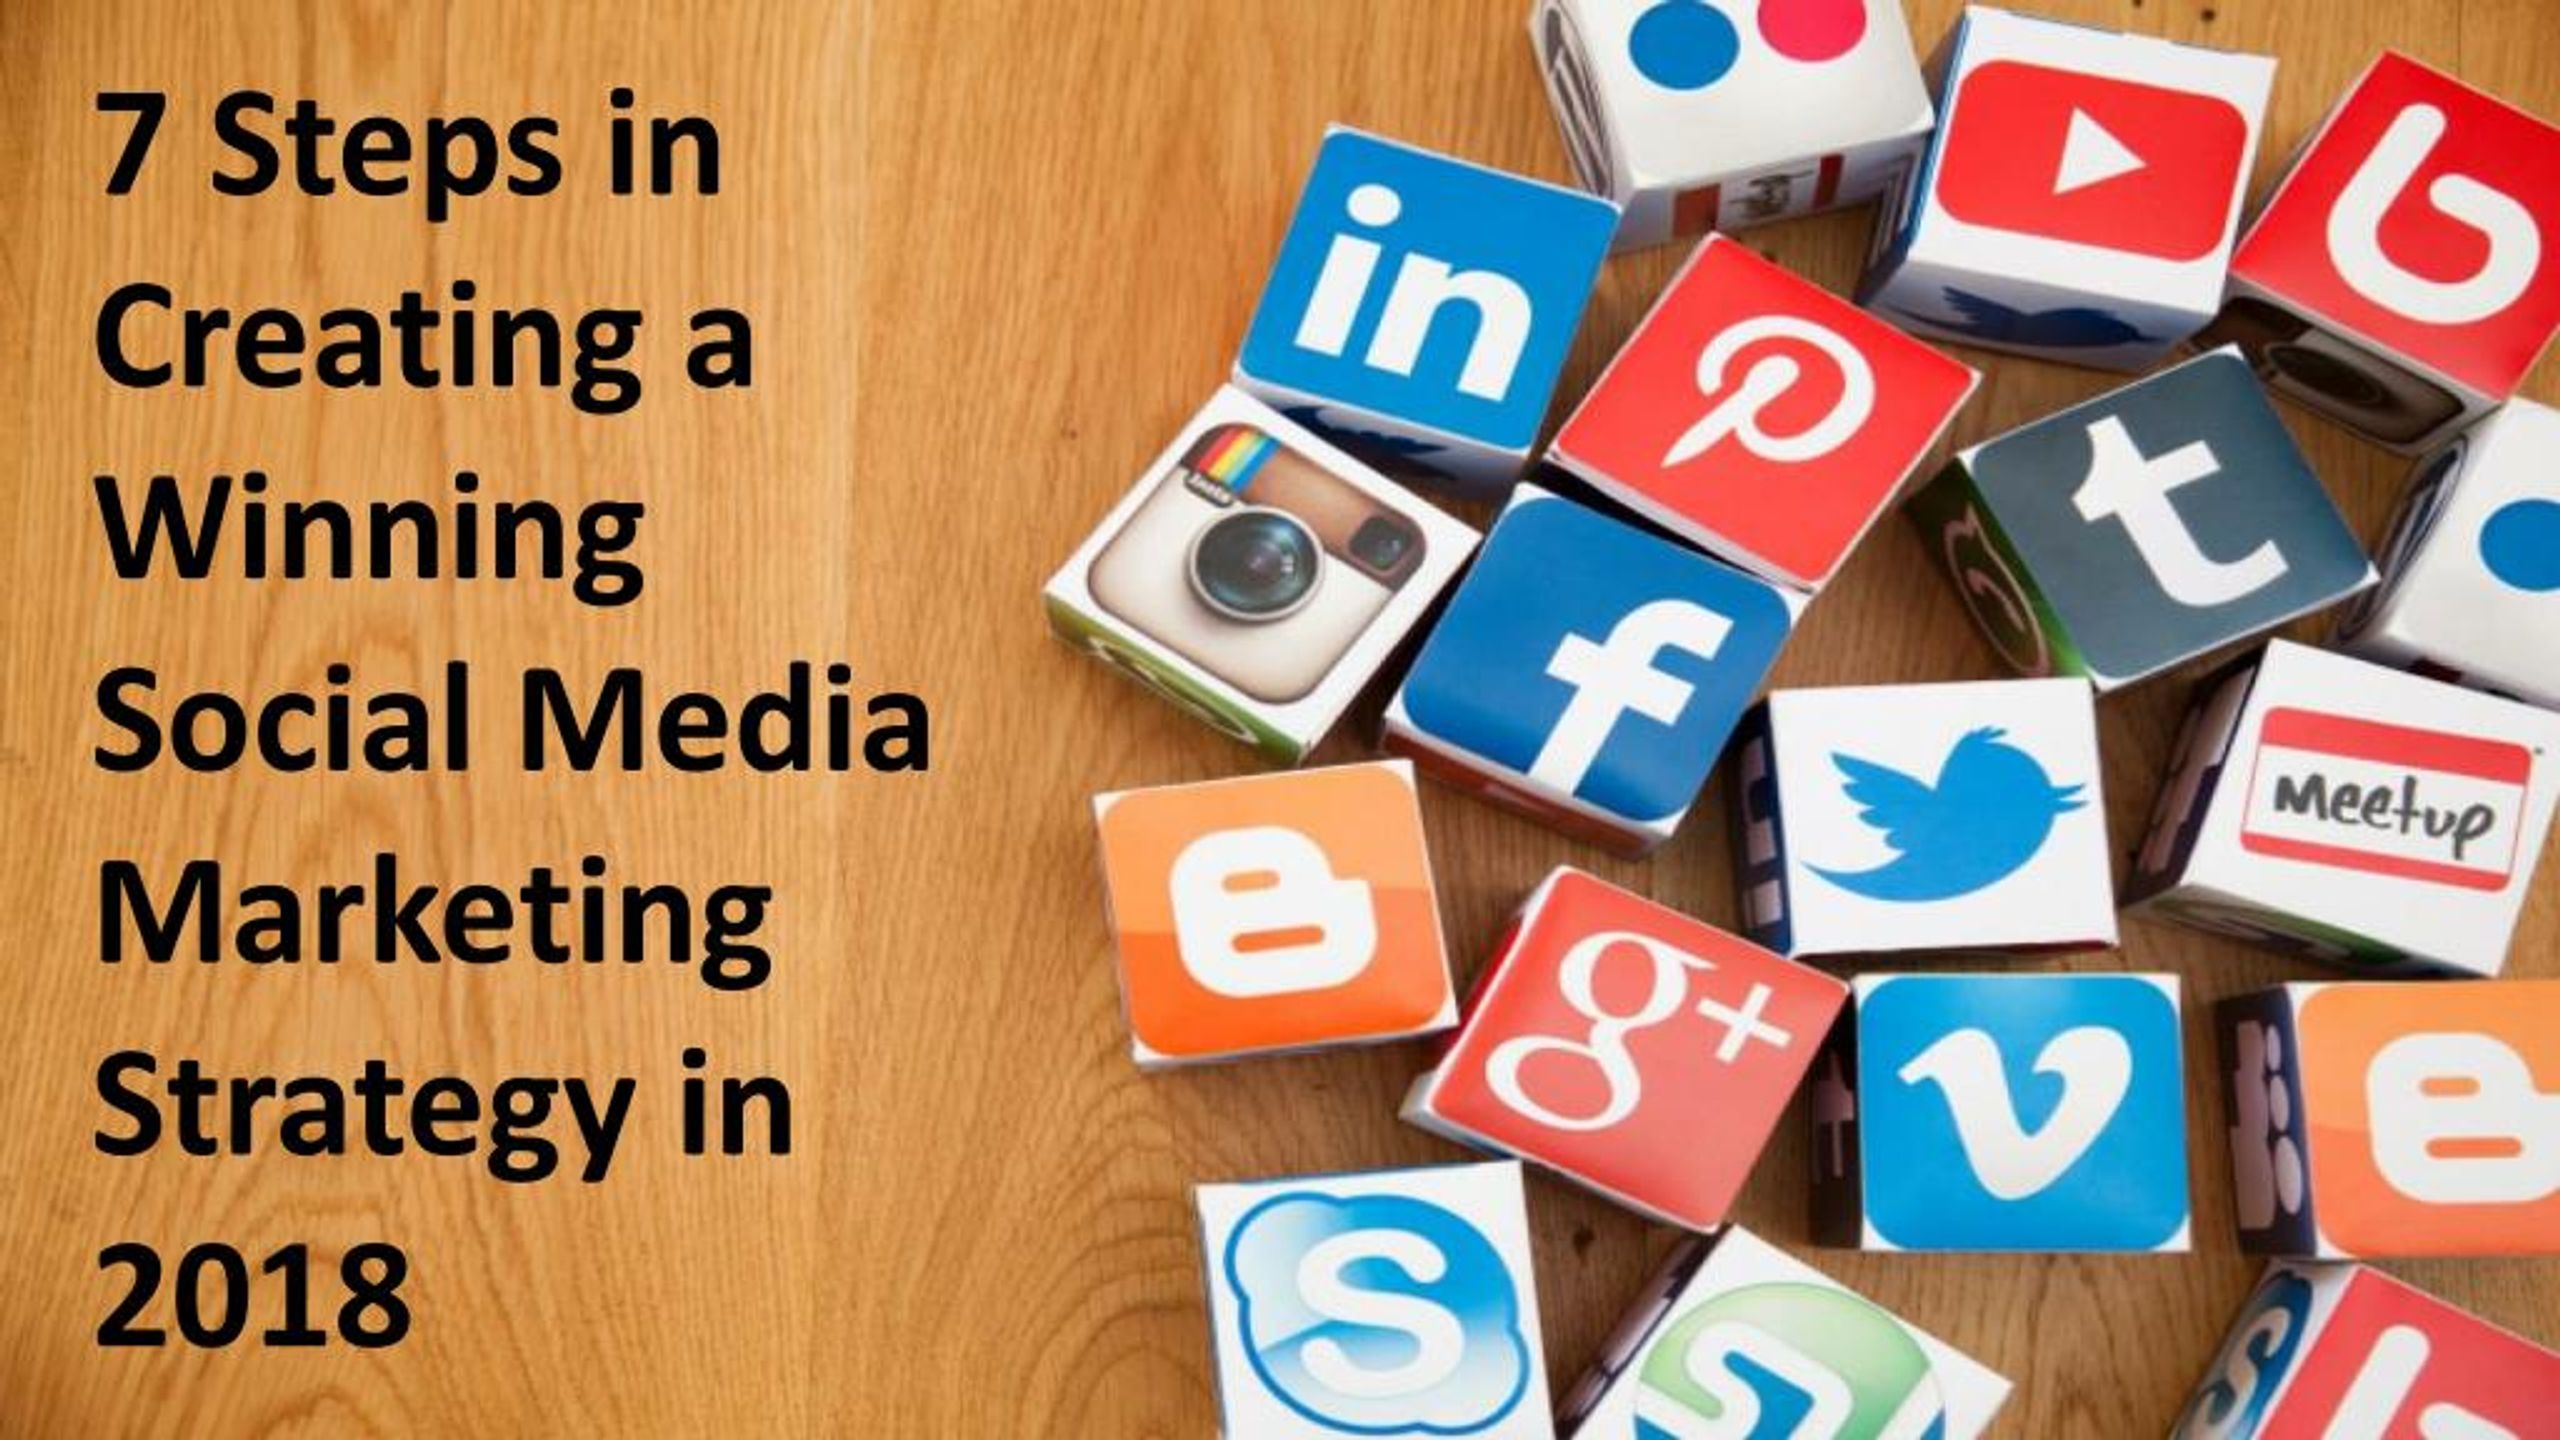 7 steps in creating a winning social media marketing strategy Ppt 7 Steps In Creating A Winning Social Media Marketing Strategy In 2018 Powerpoint Presentation Id 7901026